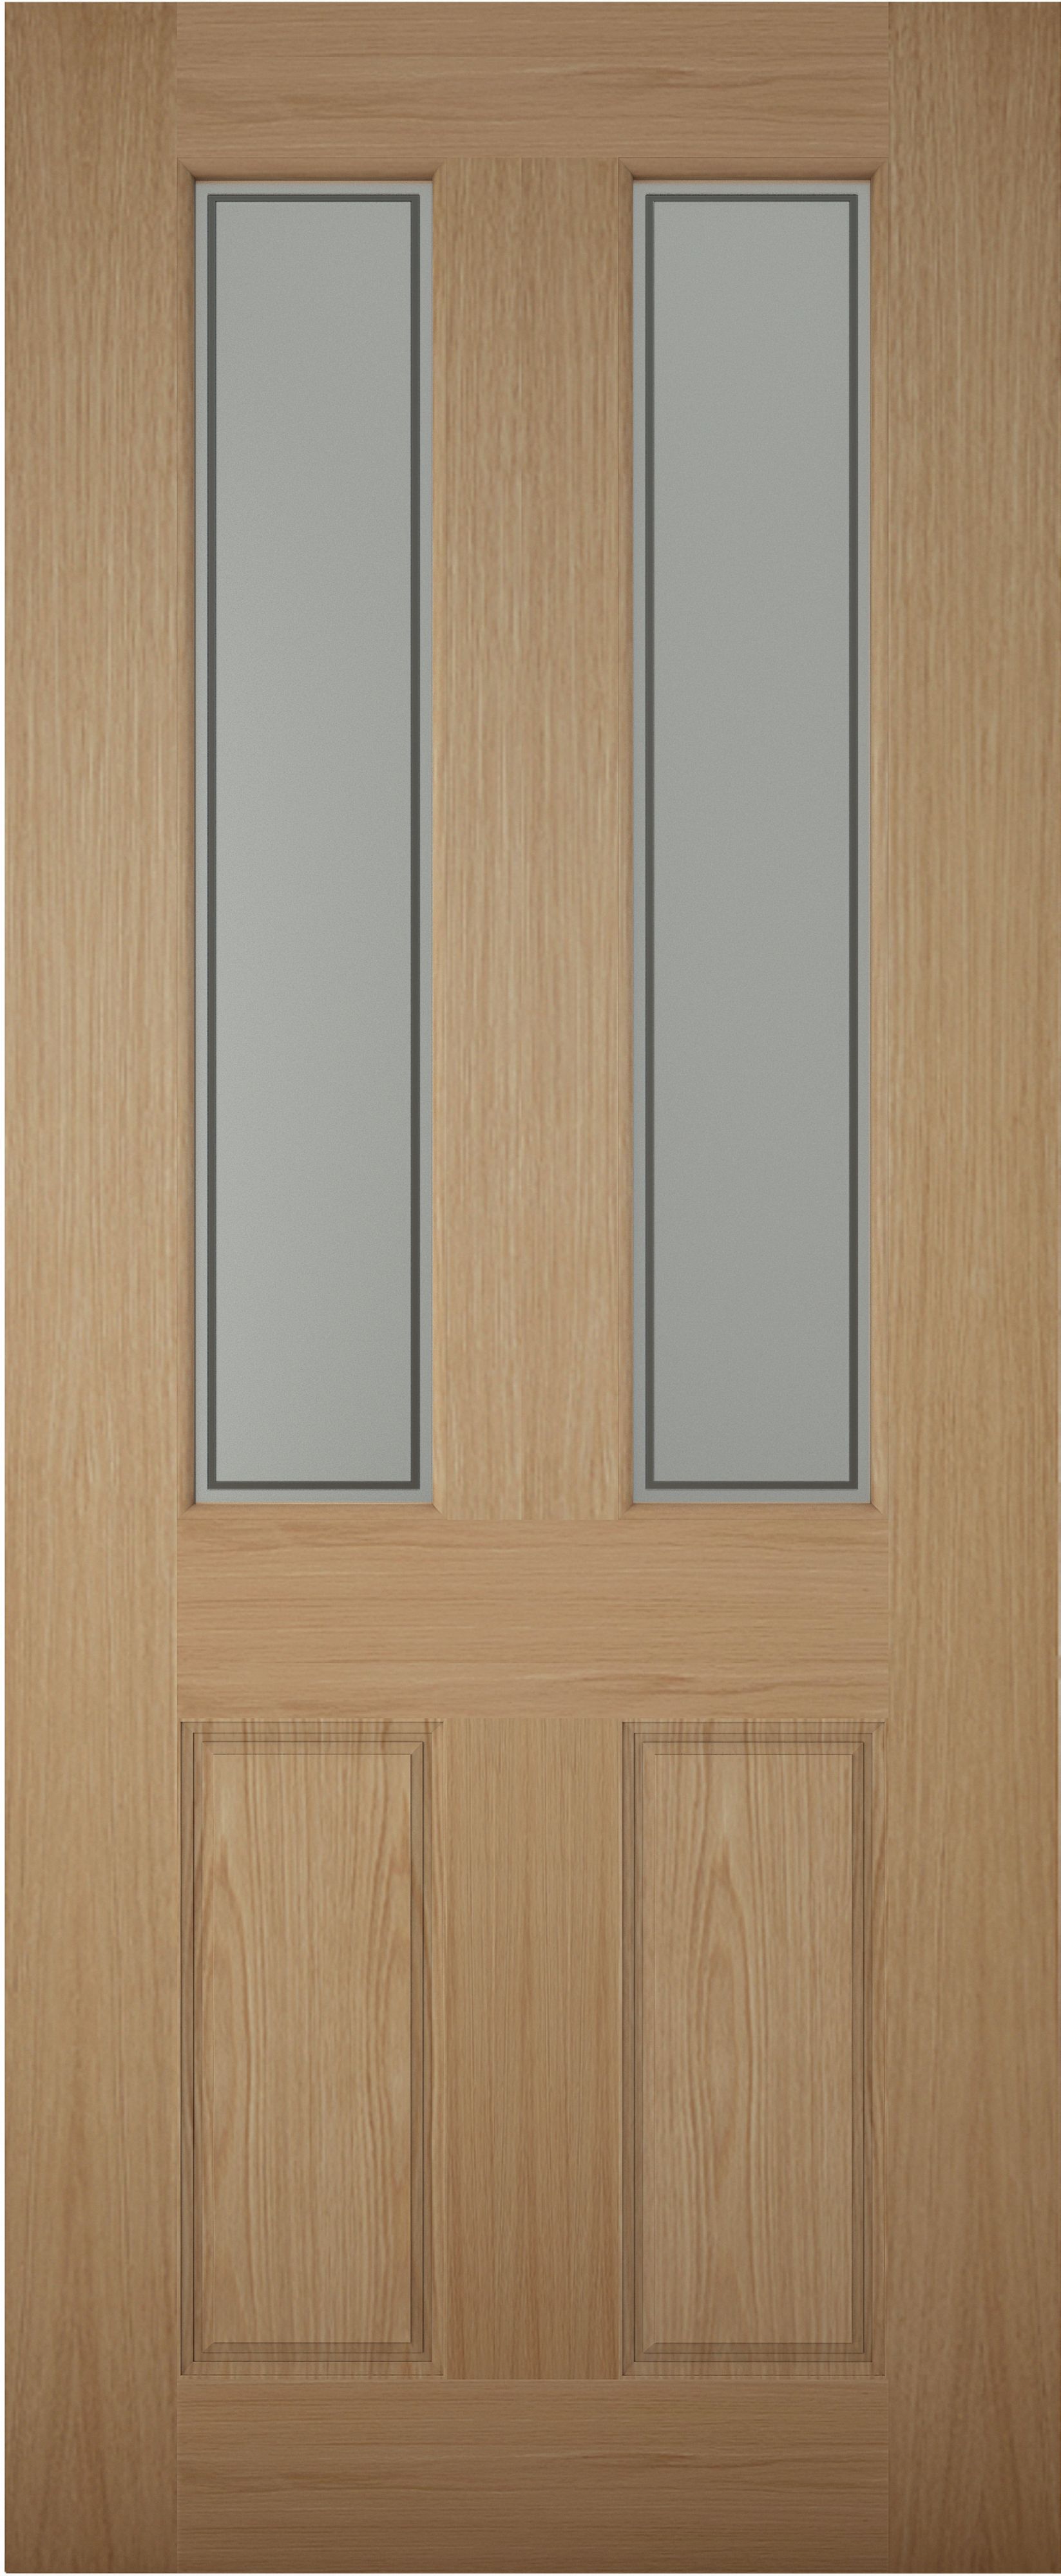 4 panel Frosted Glazed Wooden White oak veneer External Panel Front door, (H)1981mm (W)762mm